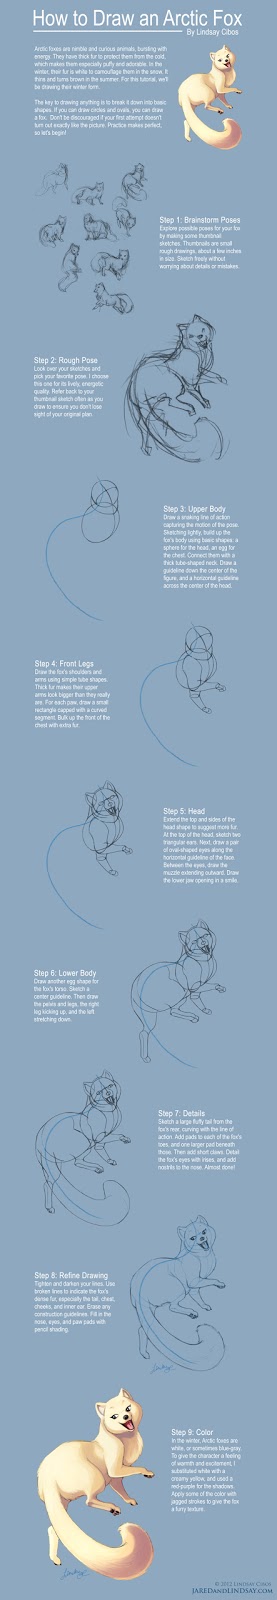 Lindsay Cibos' Art Blog: How to Draw an Arctic Fox